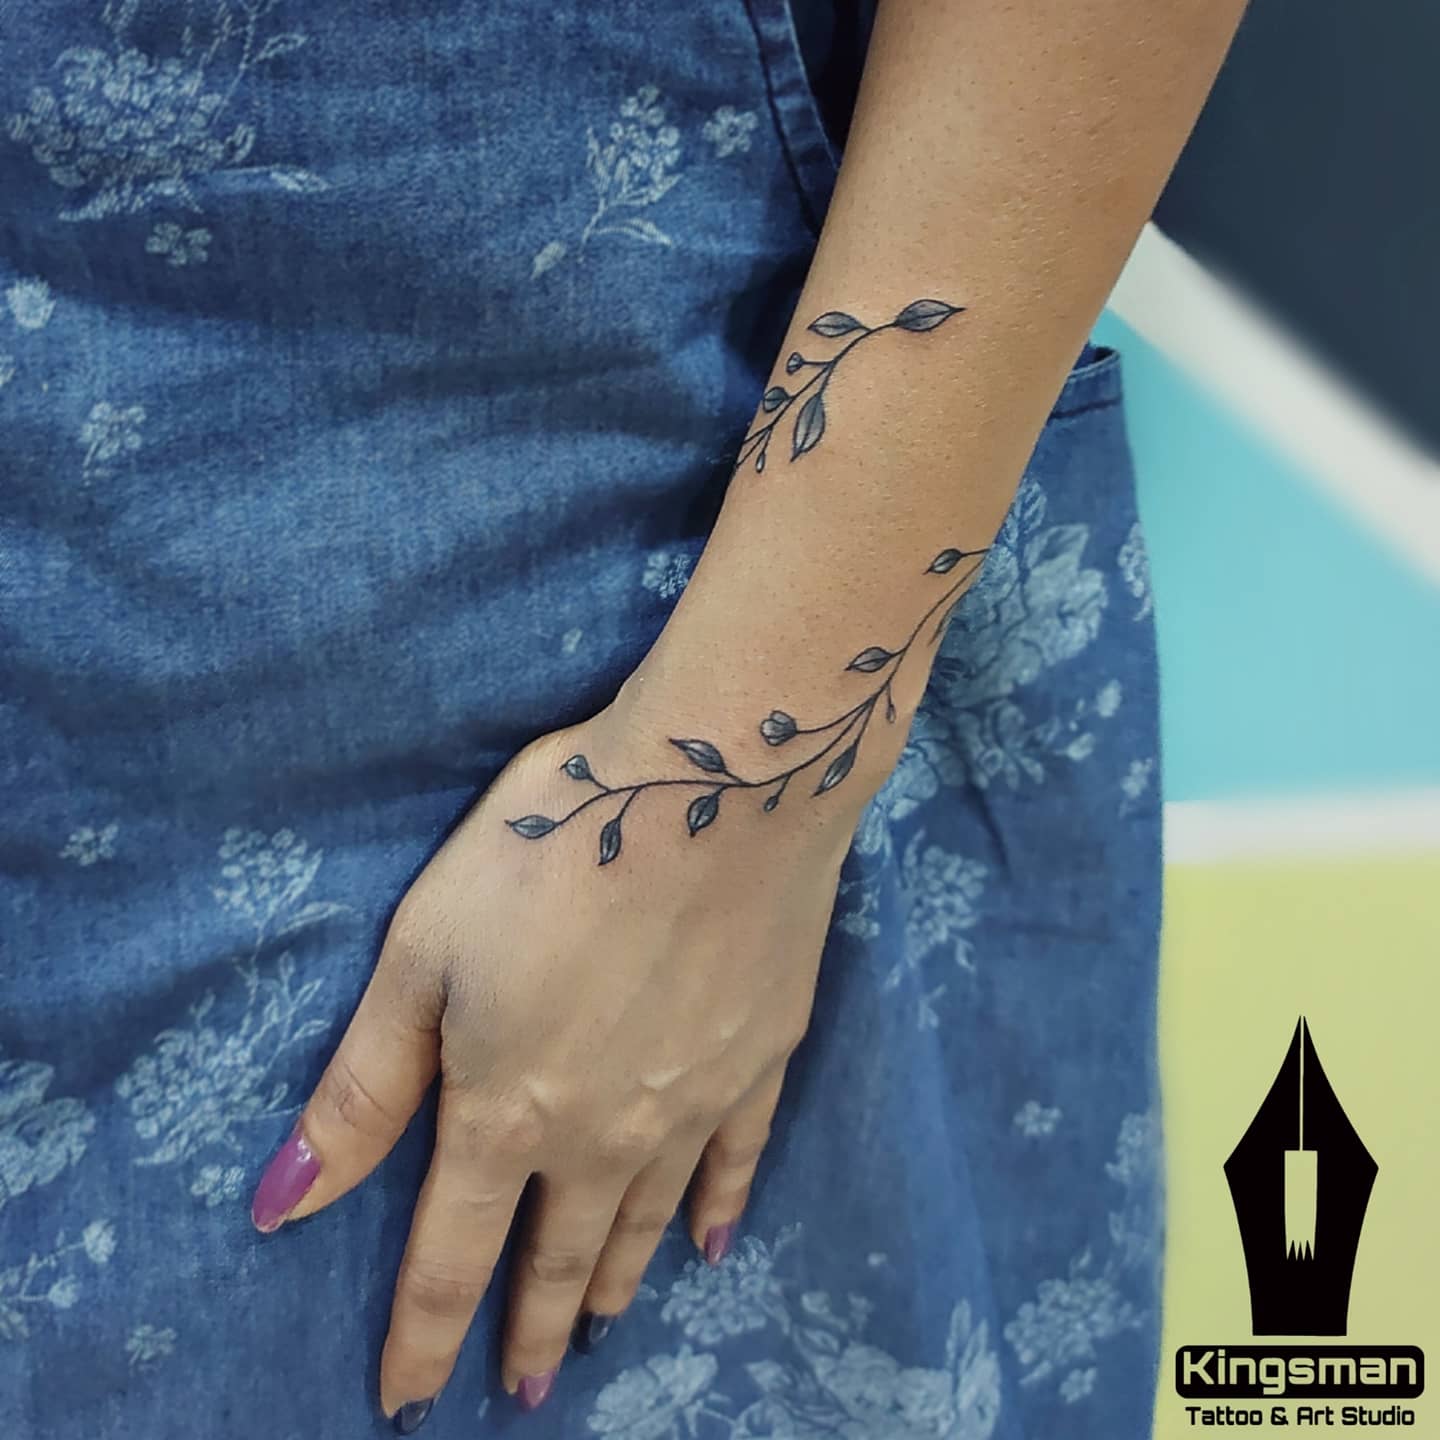 Wrist Band Tattoo | Bracelet Tattoo Design | Wrist Band Tattoo for Girls |  Small Flower Tattoo | Wrist Band Tattoo | Bracelet Tattoo Design | Wrist  Band Tattoo for Girls |